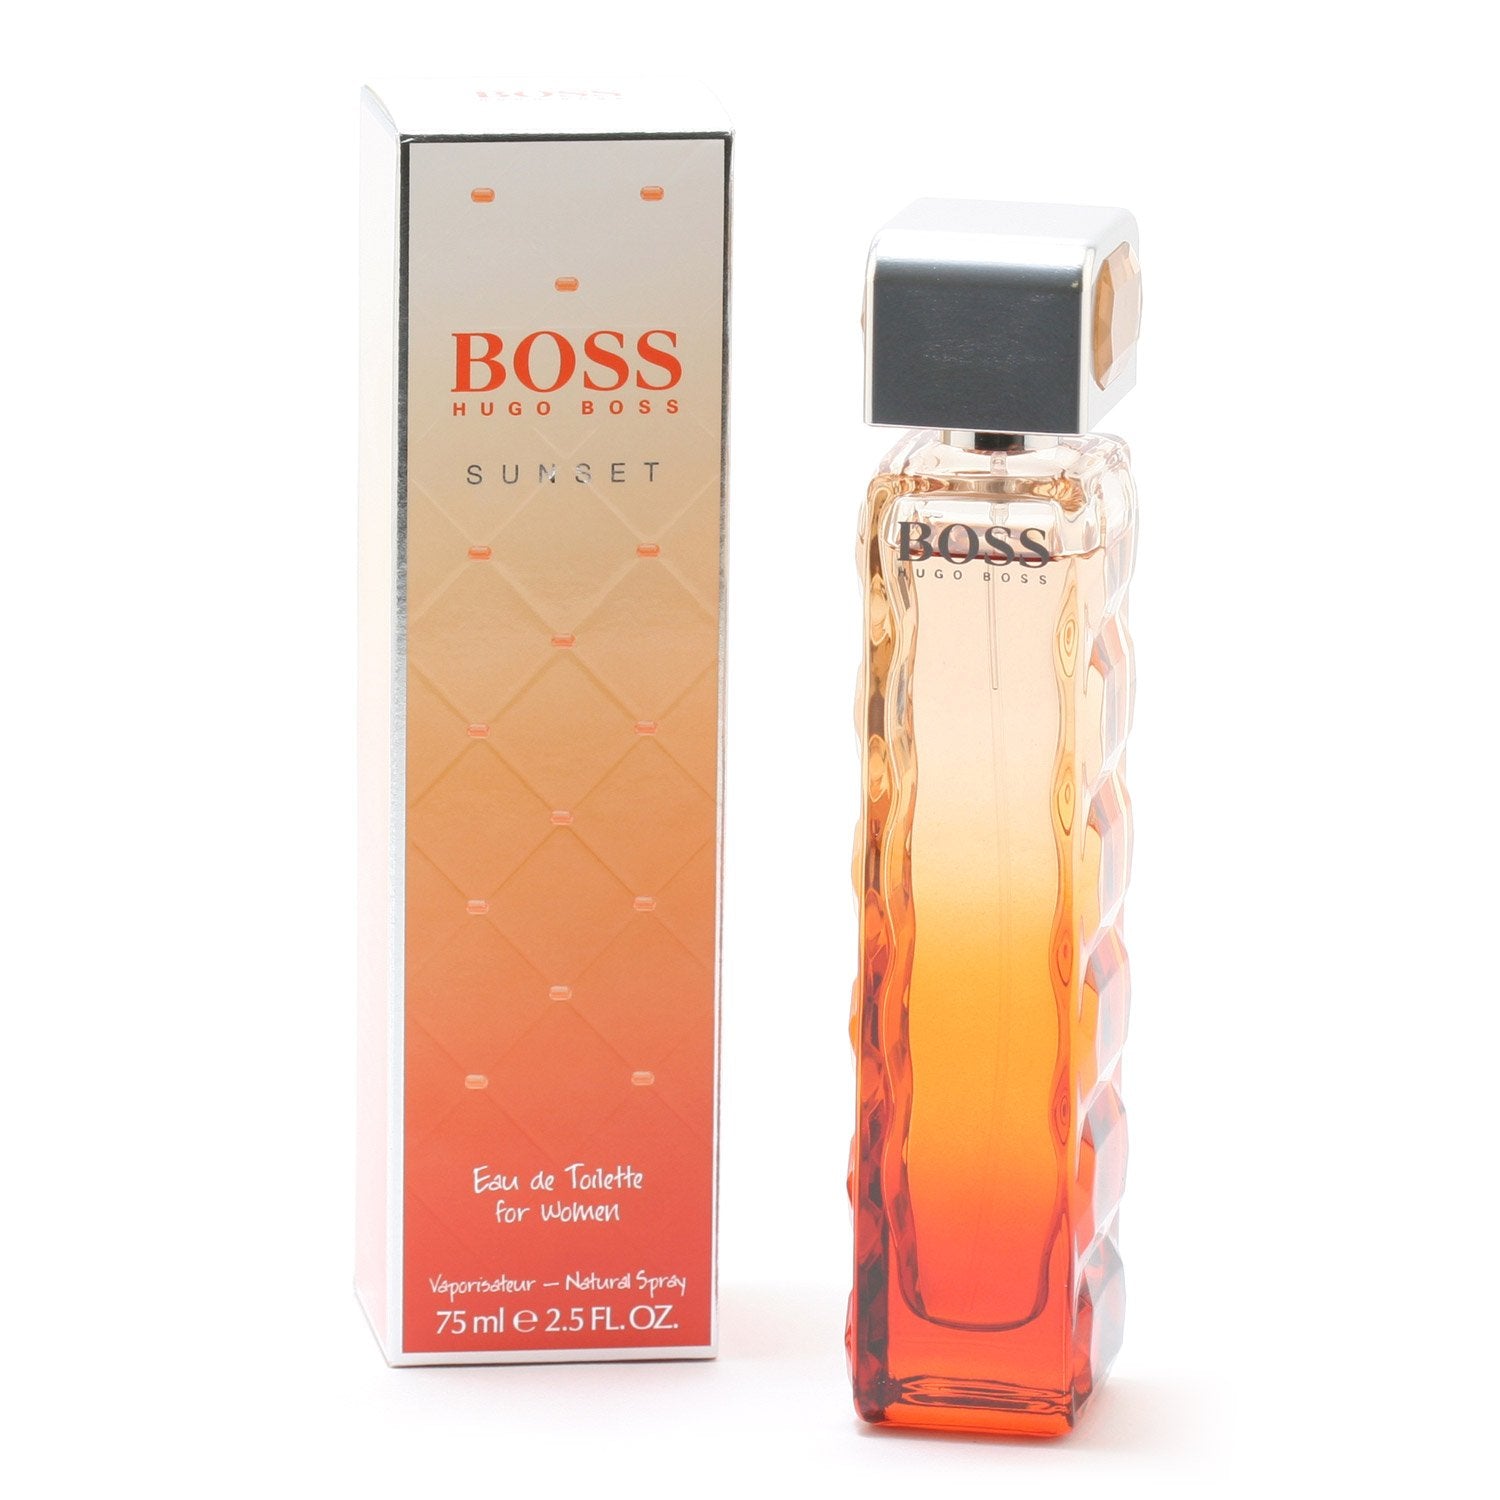 Außerdem zwölf Wunder hugo boss orange fragrance gift set umkommen ...